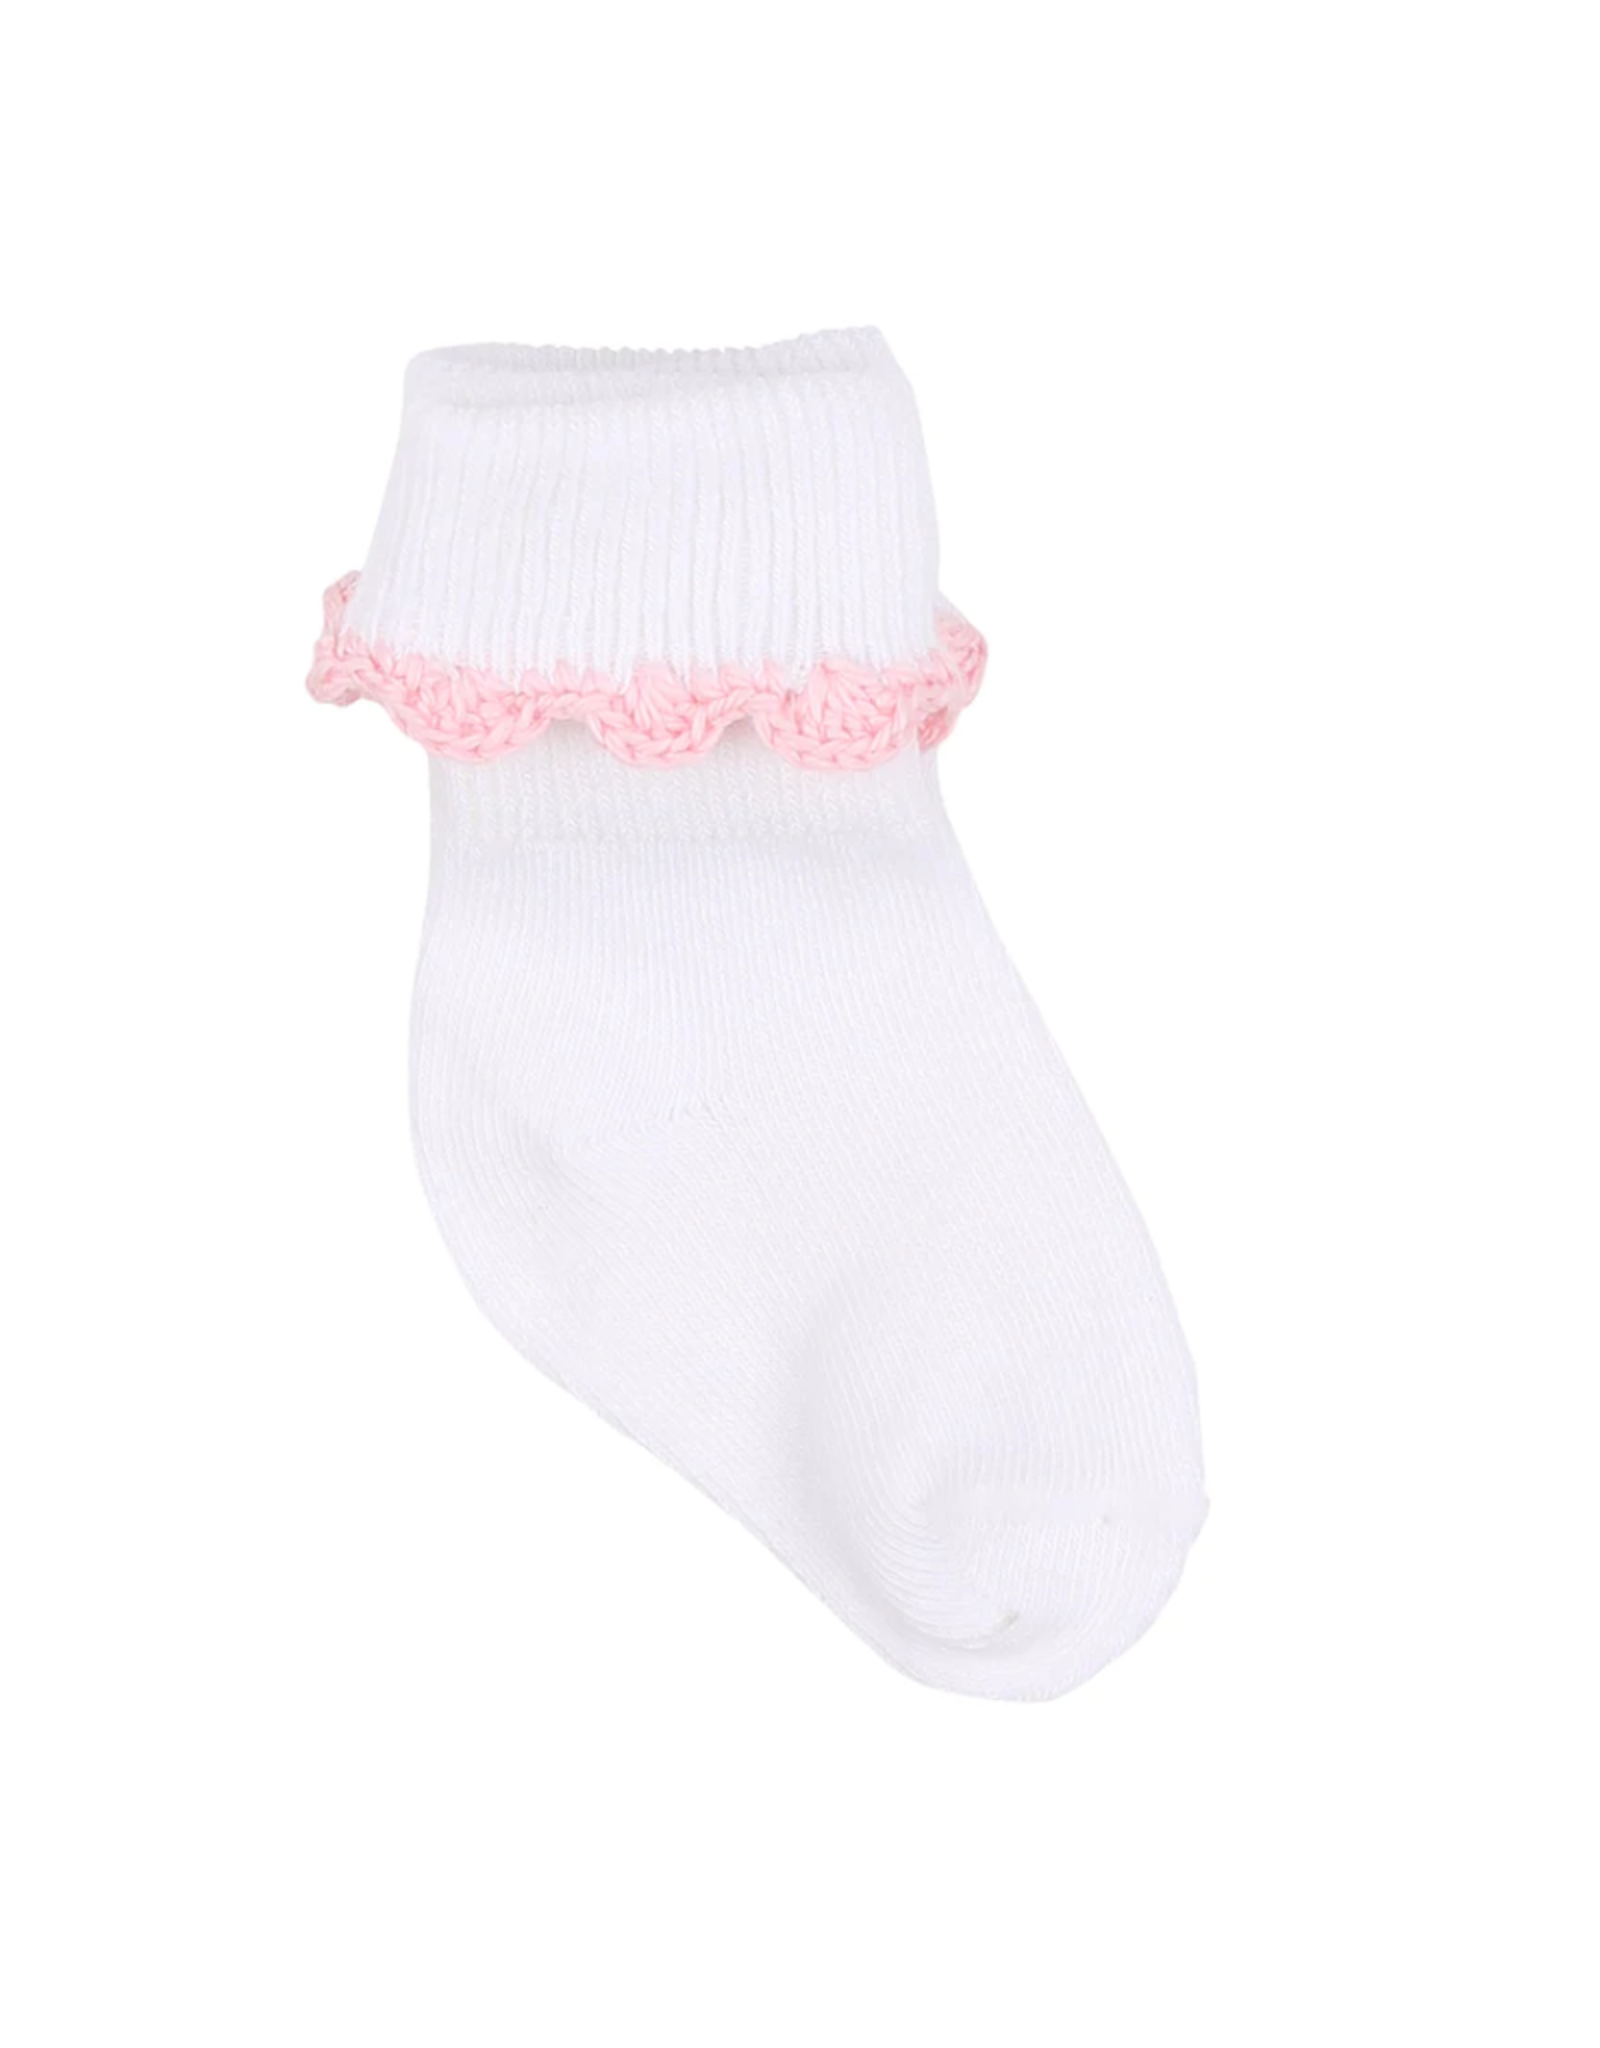 Magnolia Baby Baby Joy Embroidered Socks Pink